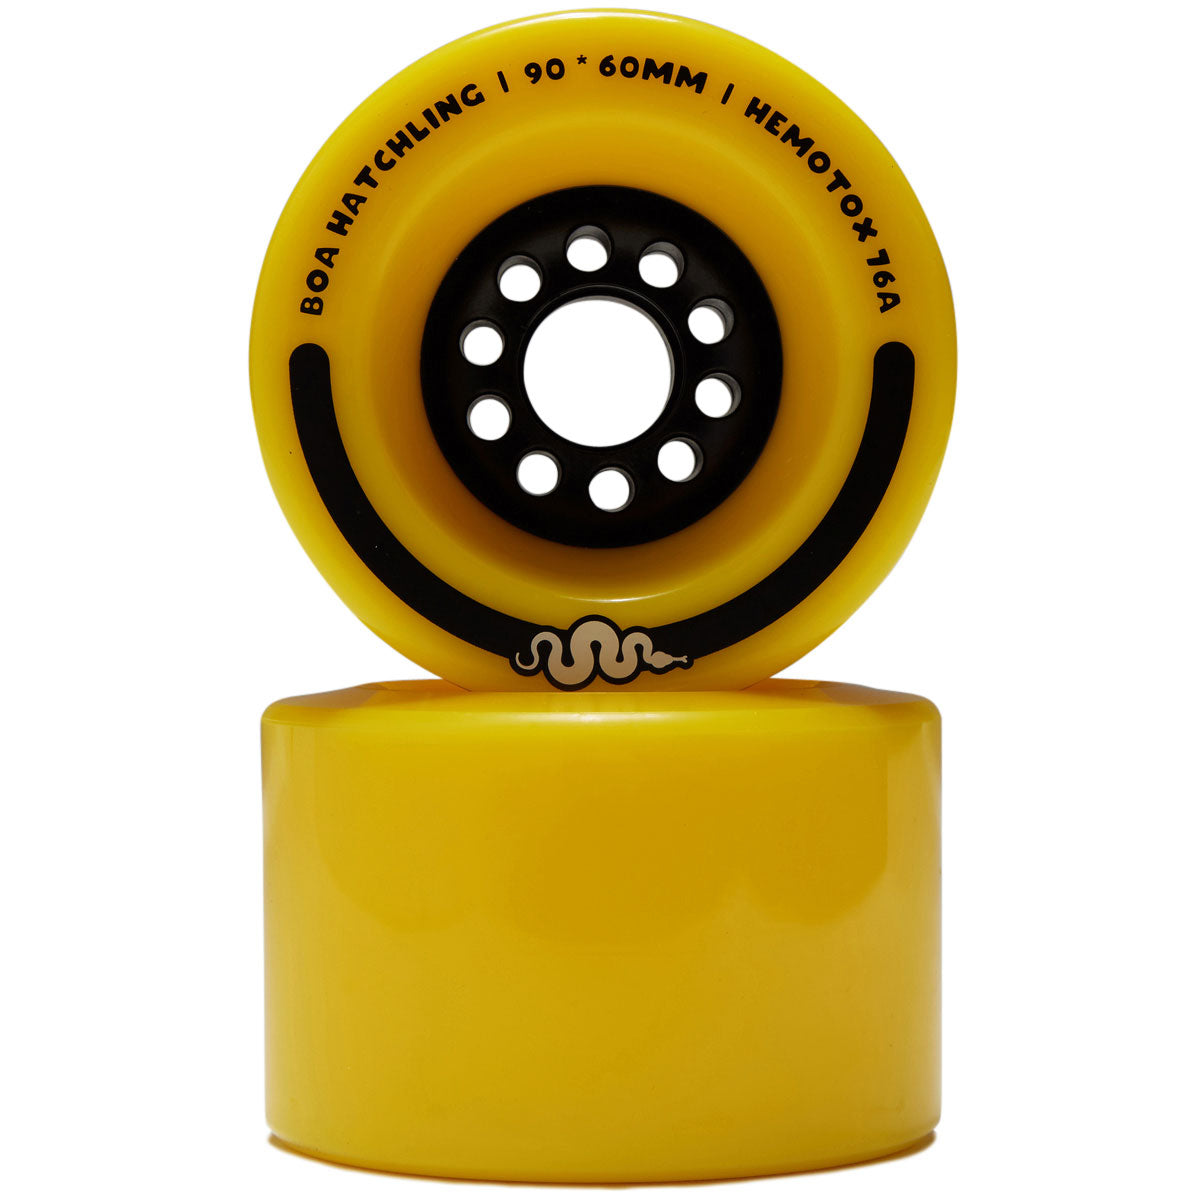 Boa Hatchling V2 76a Longboard Wheels - Yellow - 90mm image 2